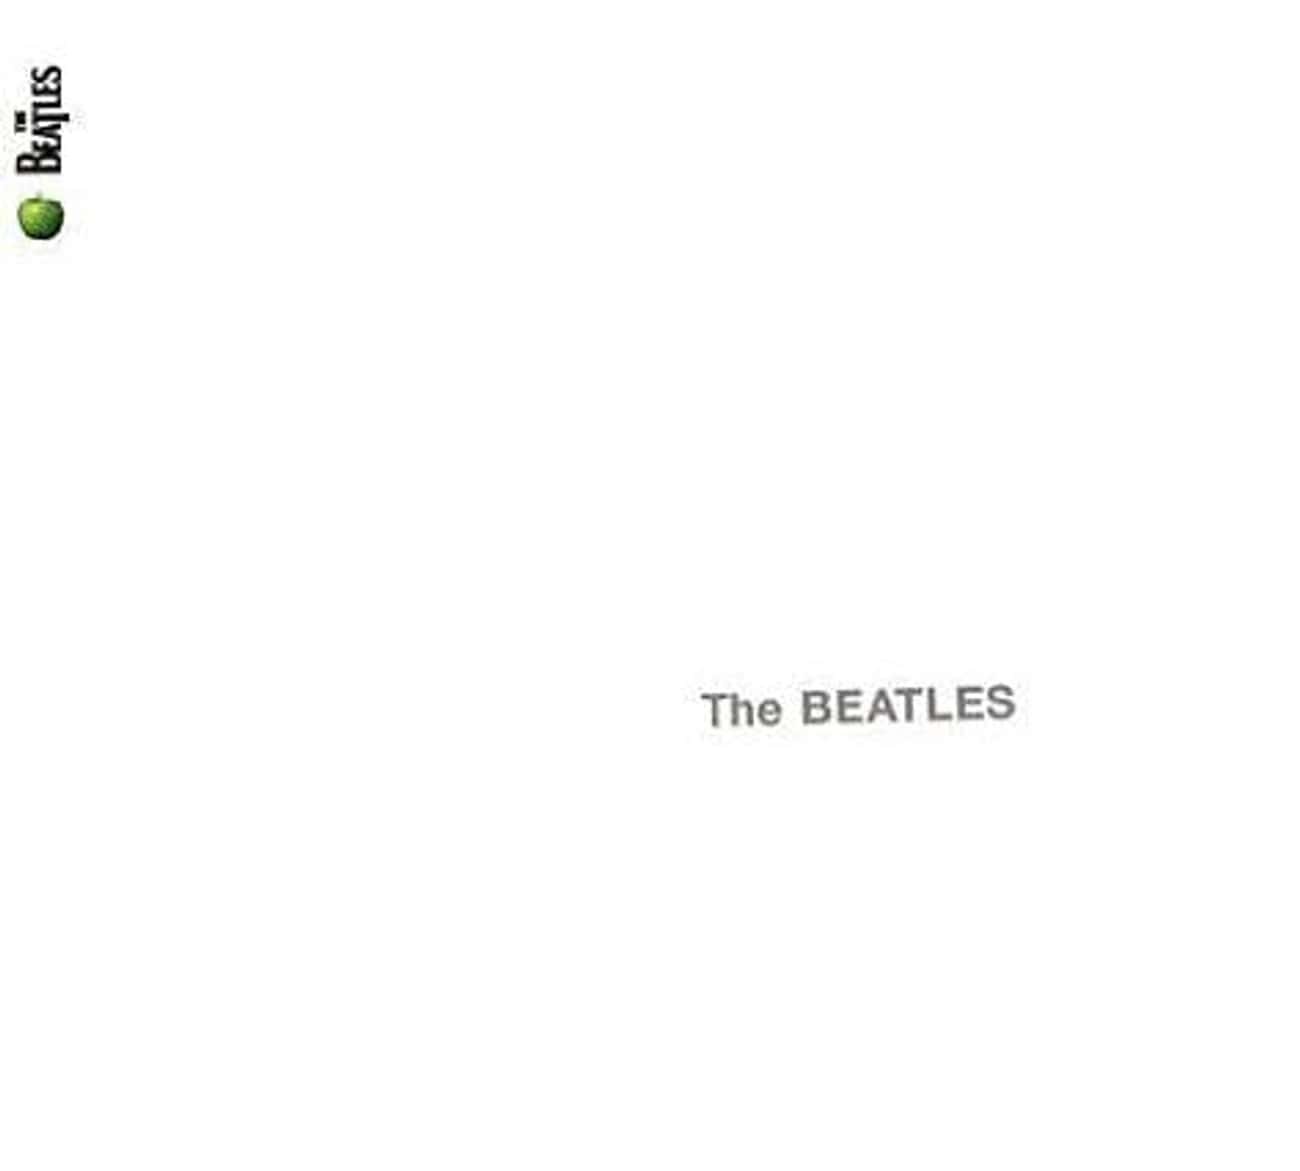 The Beatles - 'The Beatles' (The White Album)